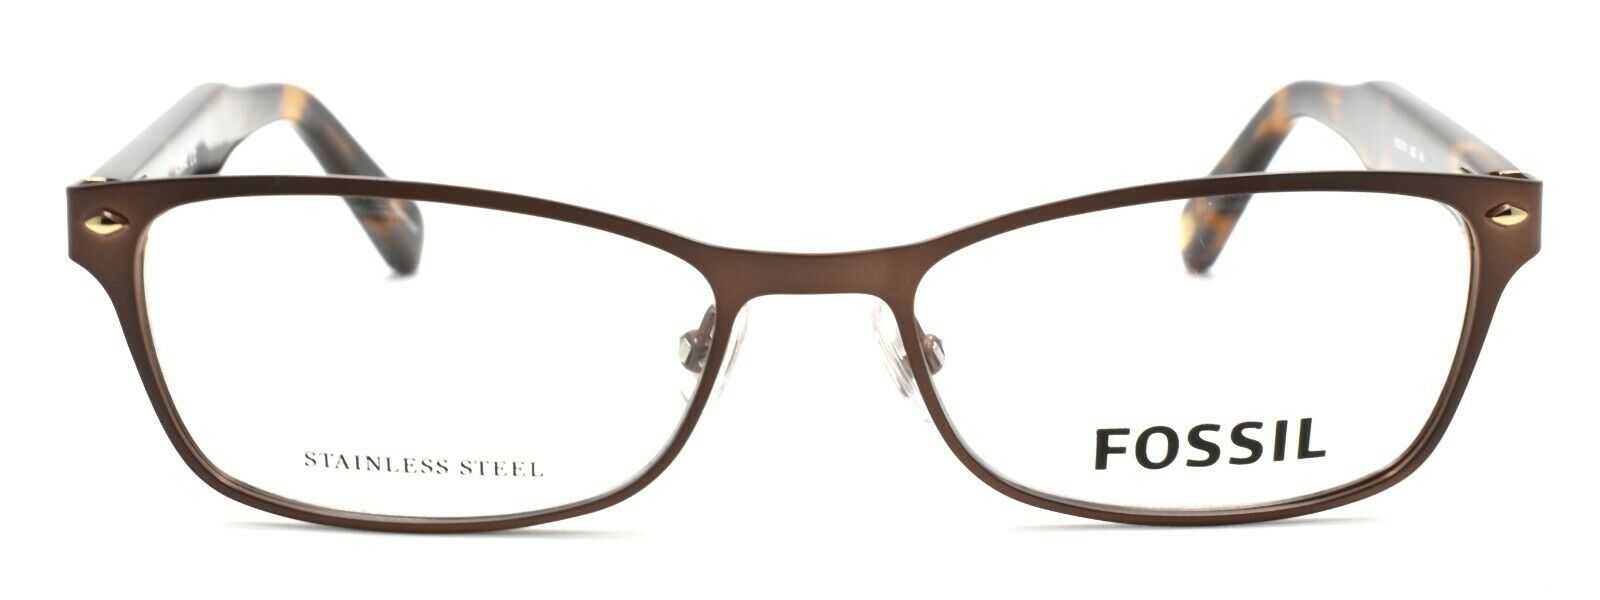 2-Fossil FOS 7001 09Q Women's Eyeglasses Frames 51-16-140 Brown + CASE-762753992109-IKSpecs